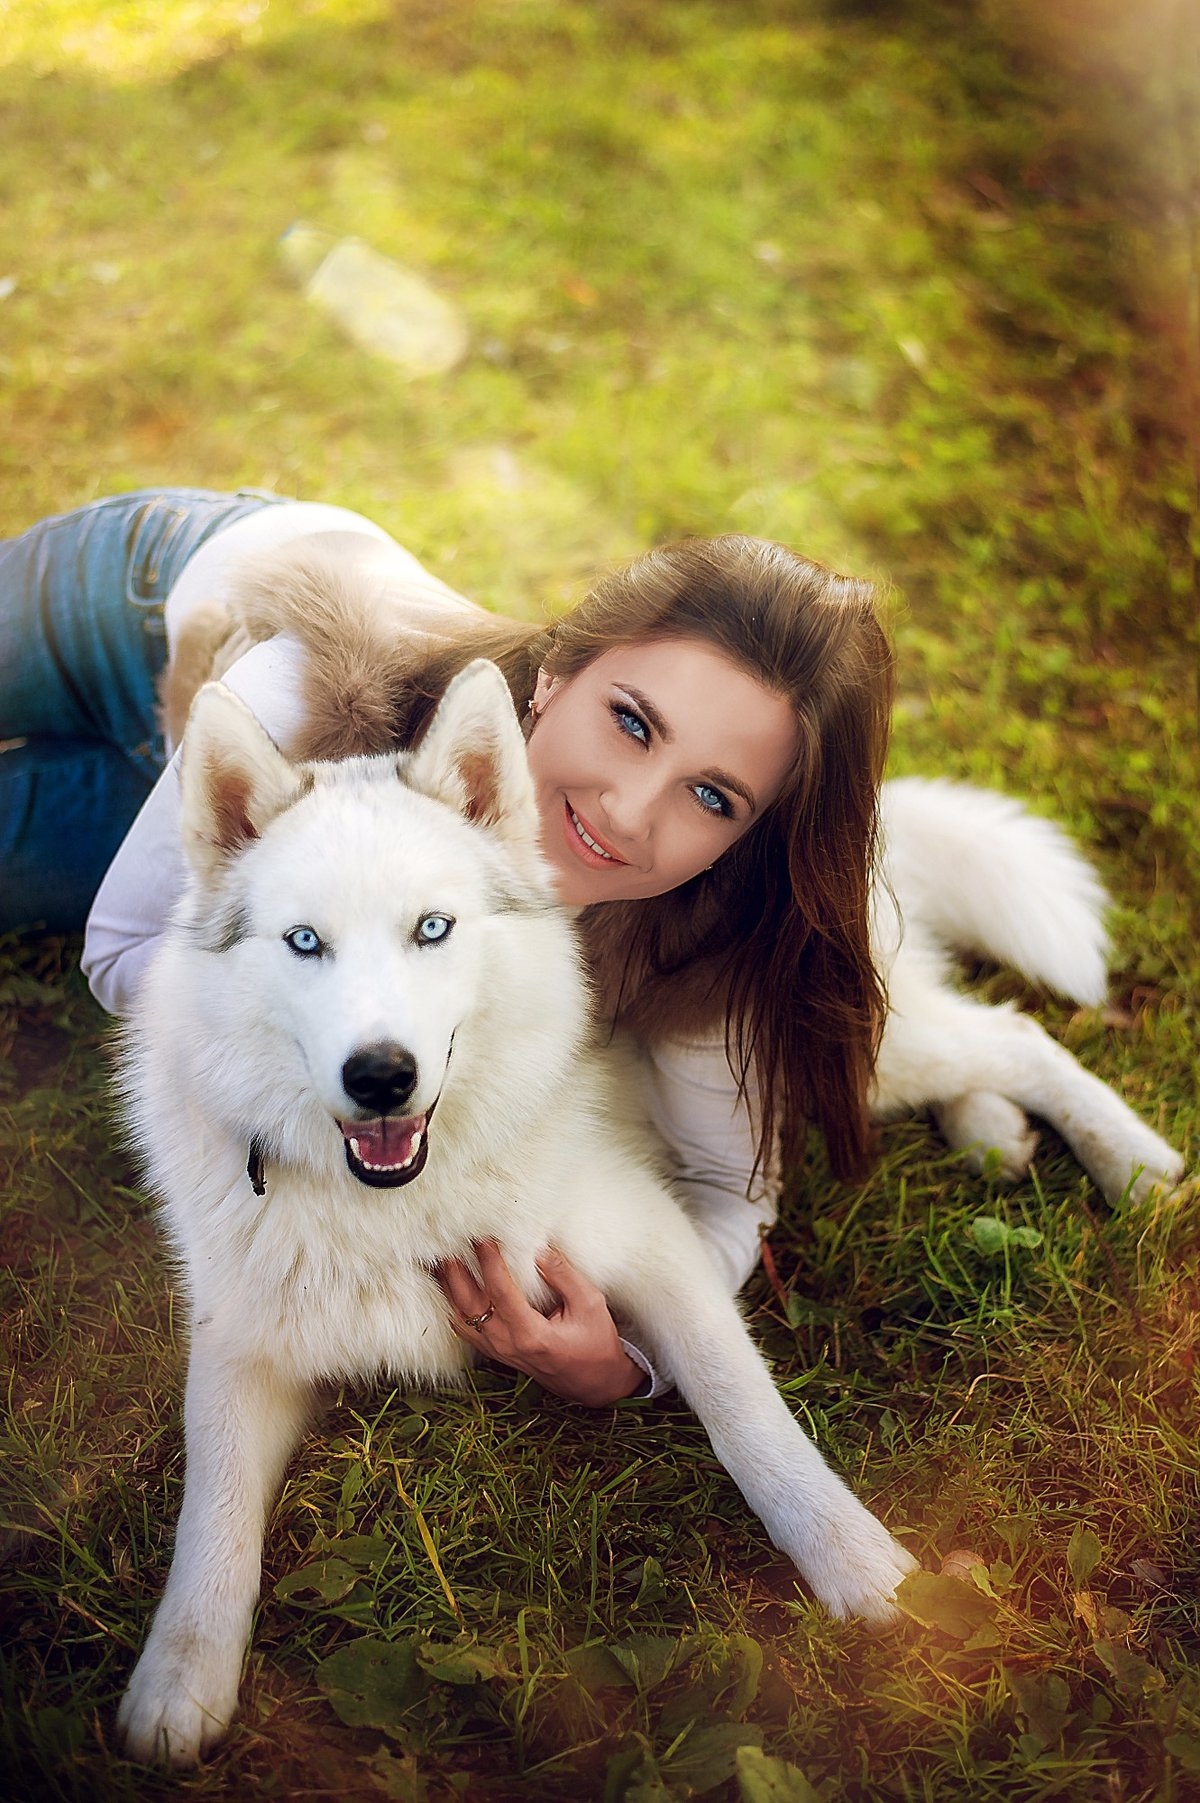 Картинка девушки с собакой. Девушка с собакой. Фотосессия с собакой. Девушка и хаски. Девушка с собакой фотосессия.